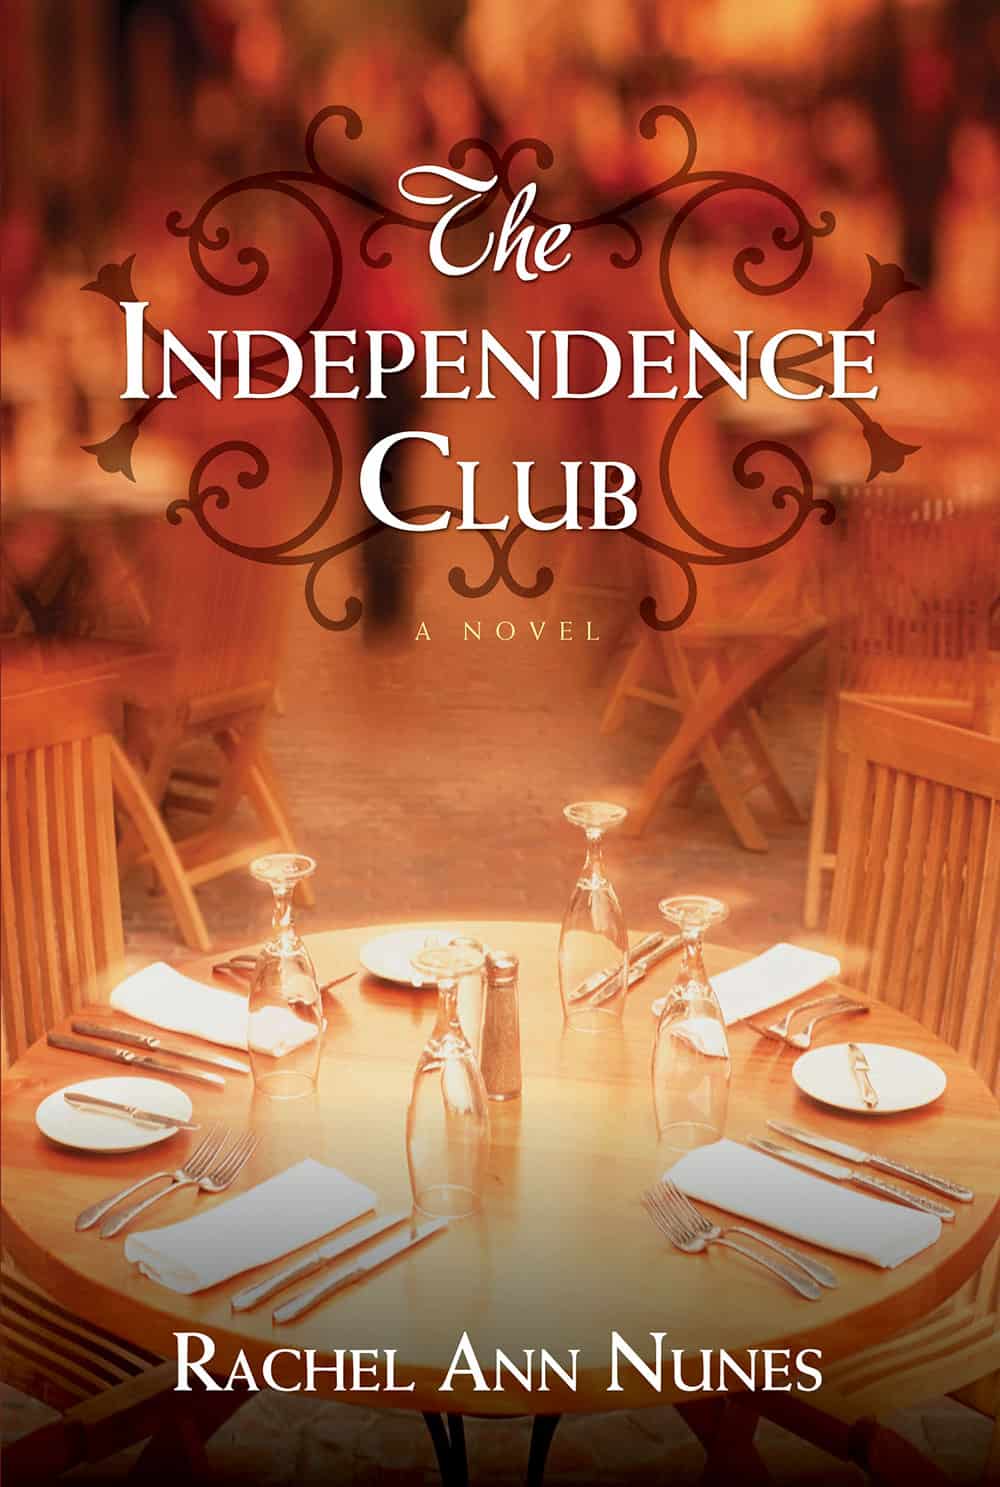 The Independence Club by Rachel Ann Nunes